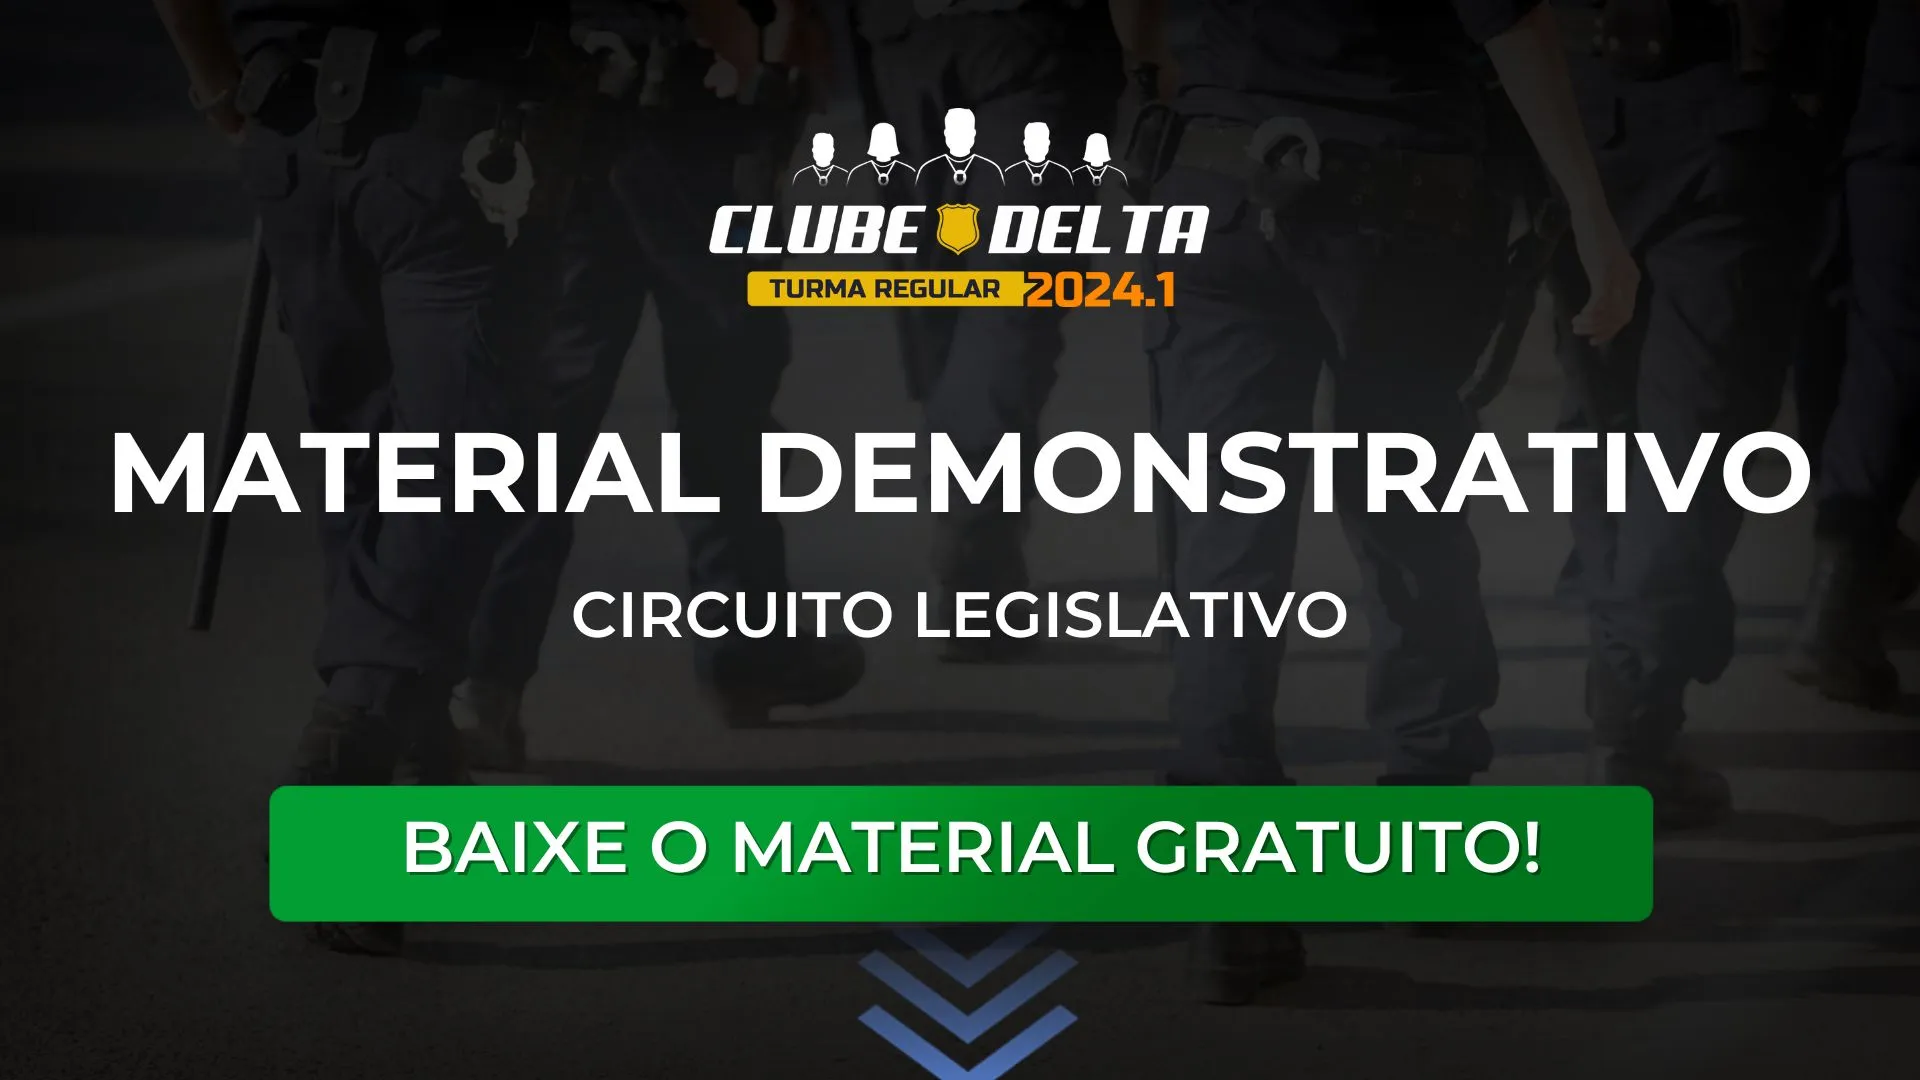 Material demonstrativo para Delegado de Polícia: Circuito legislativo do Clube Delta